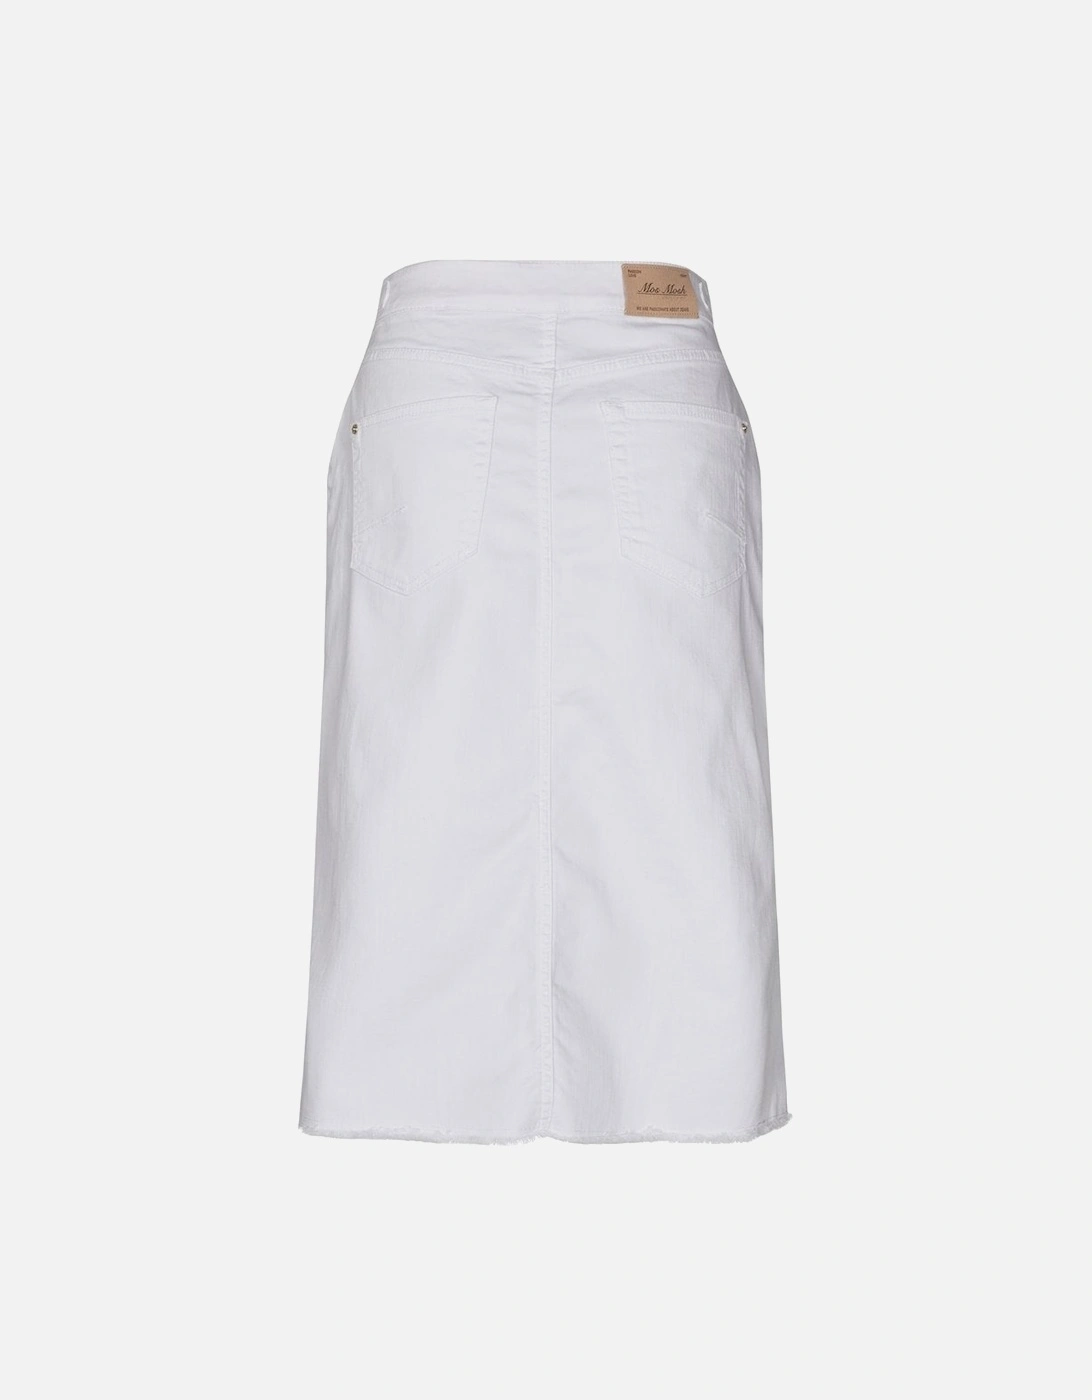 Selma white skirt